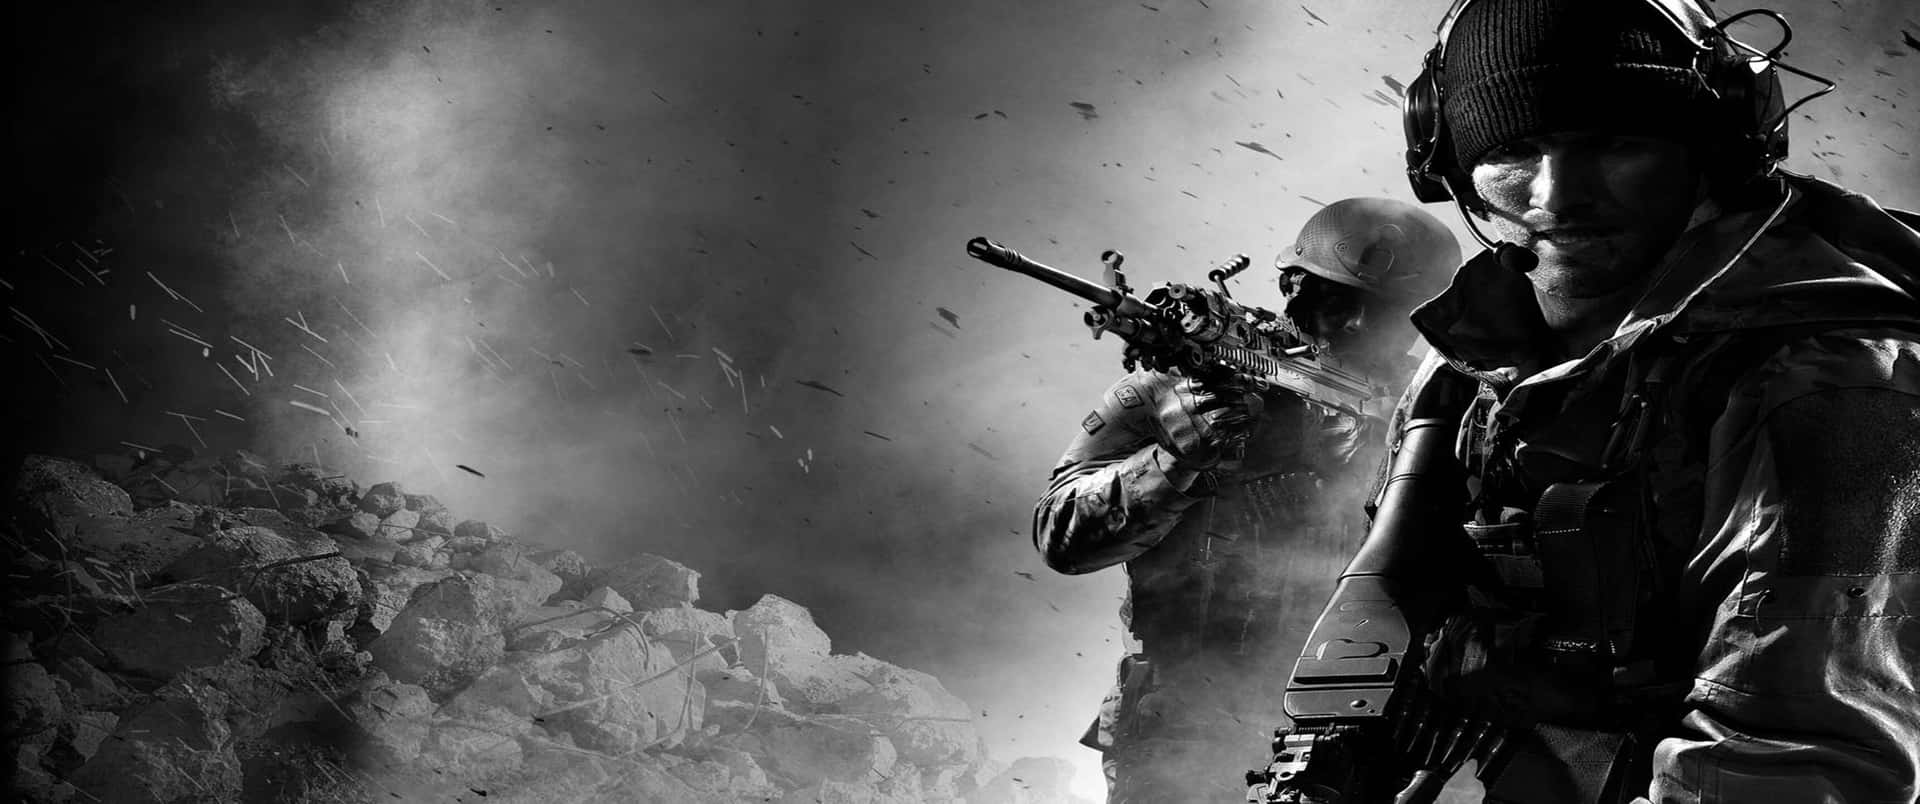 Soldatimilitari 3440x1440p Sfondo Call Of Duty Modern Warfare